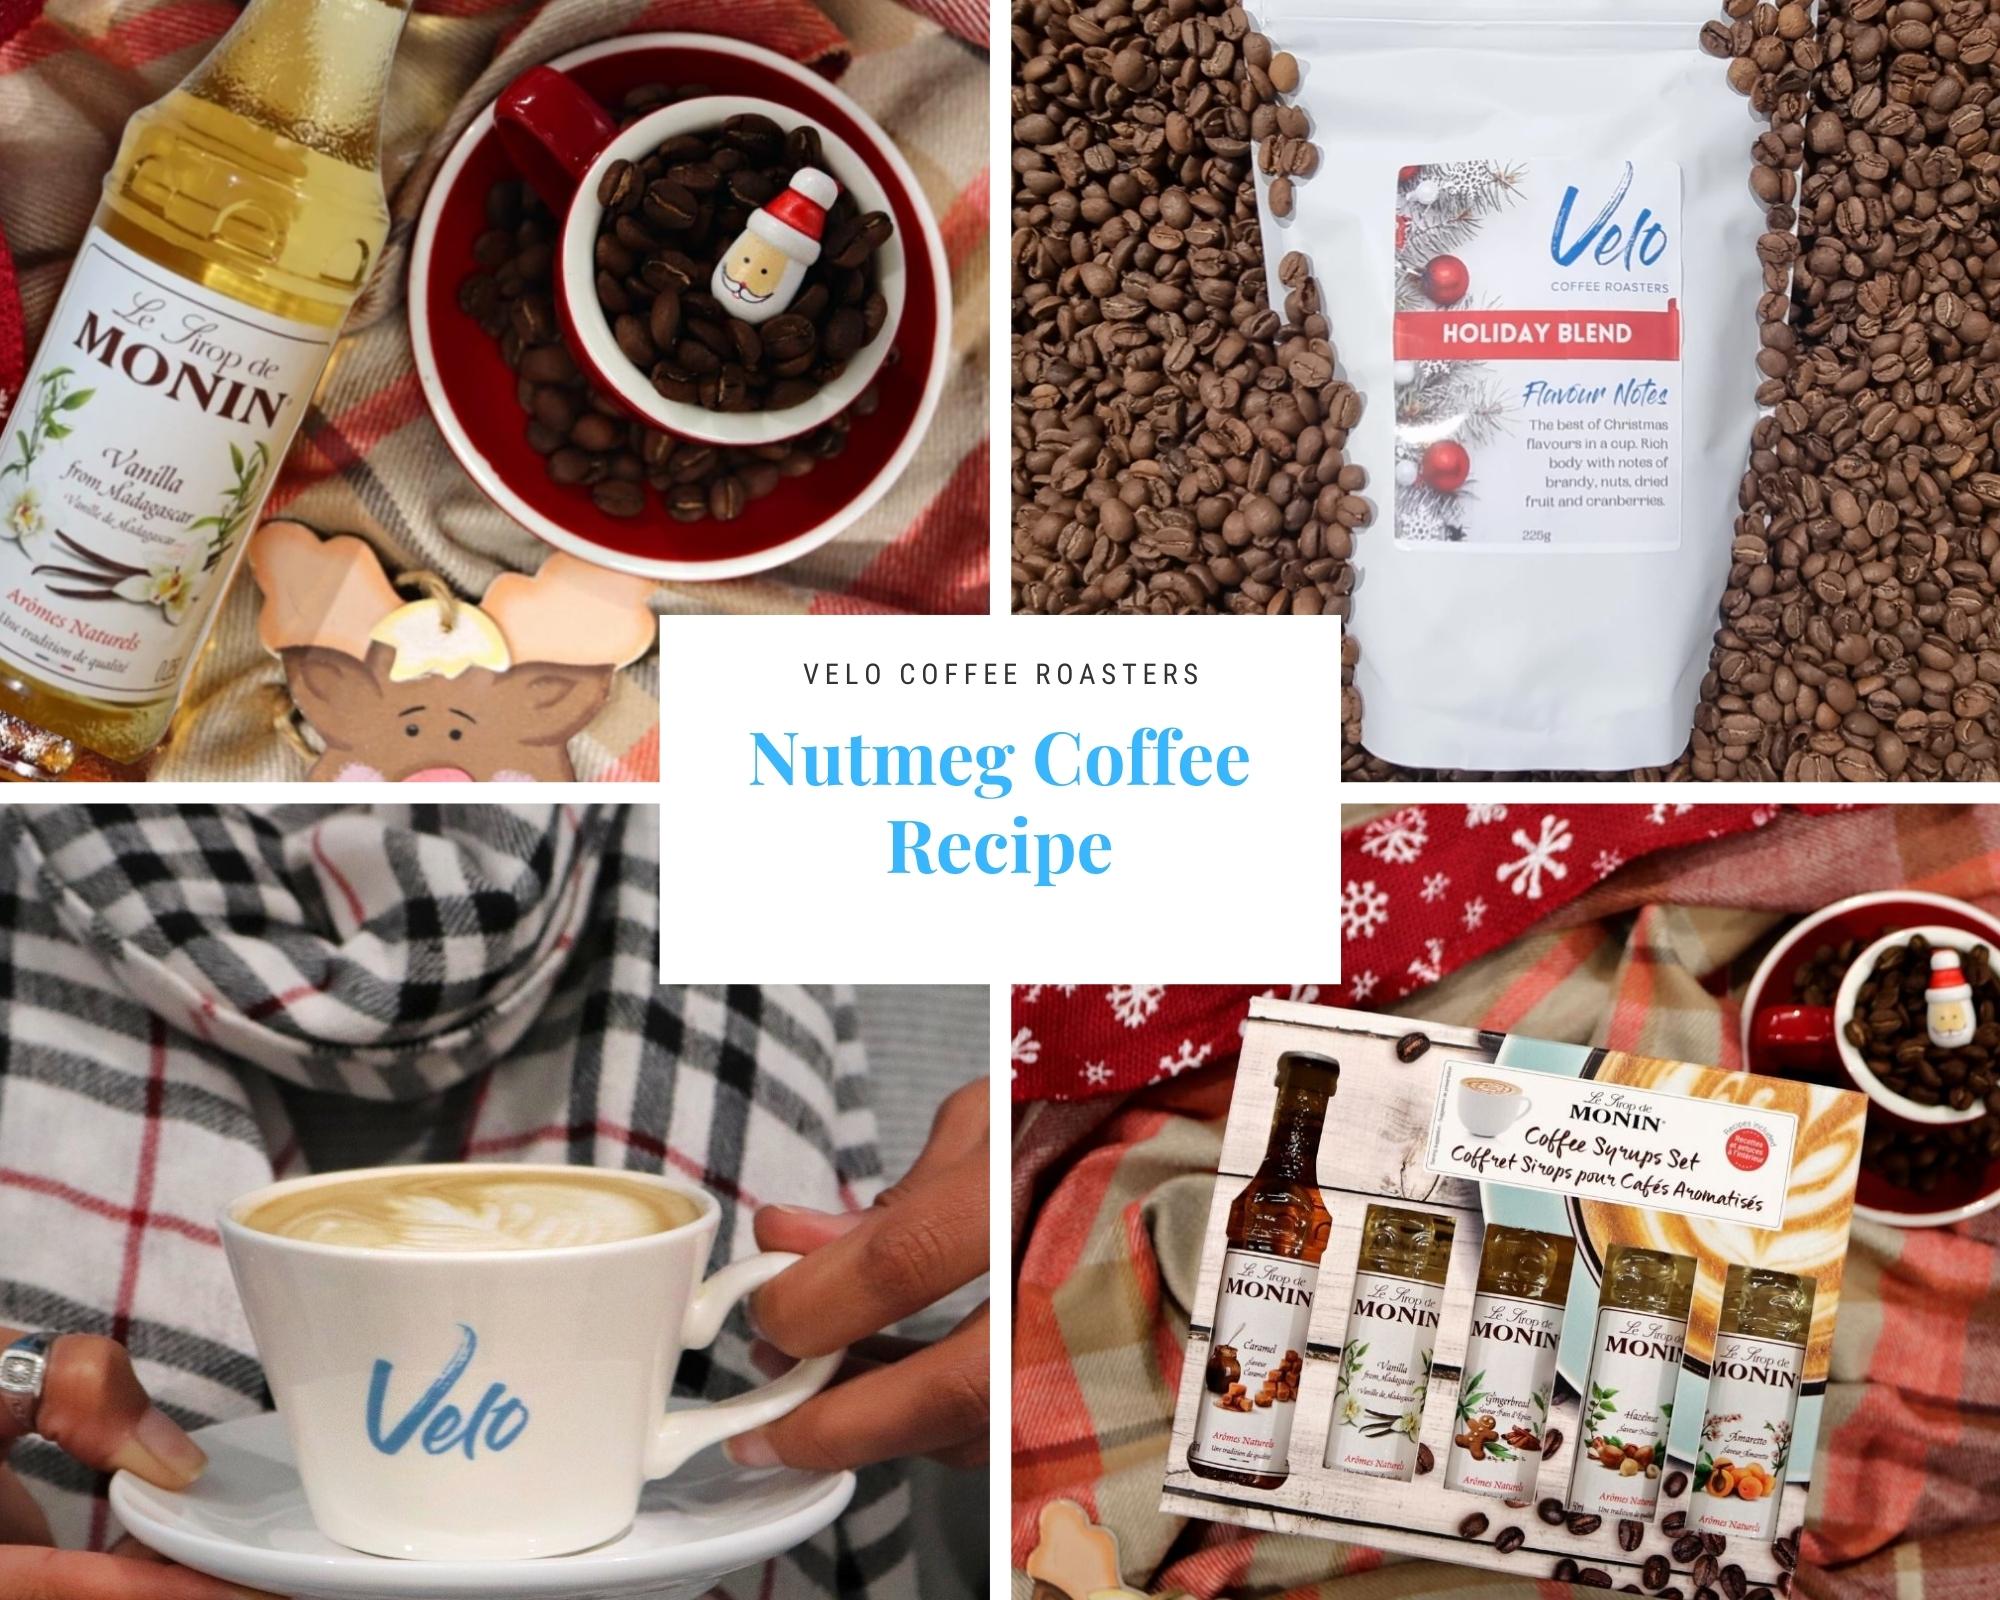 Velo Nutmeg Coffee Recipe - Velo Coffee Roasters